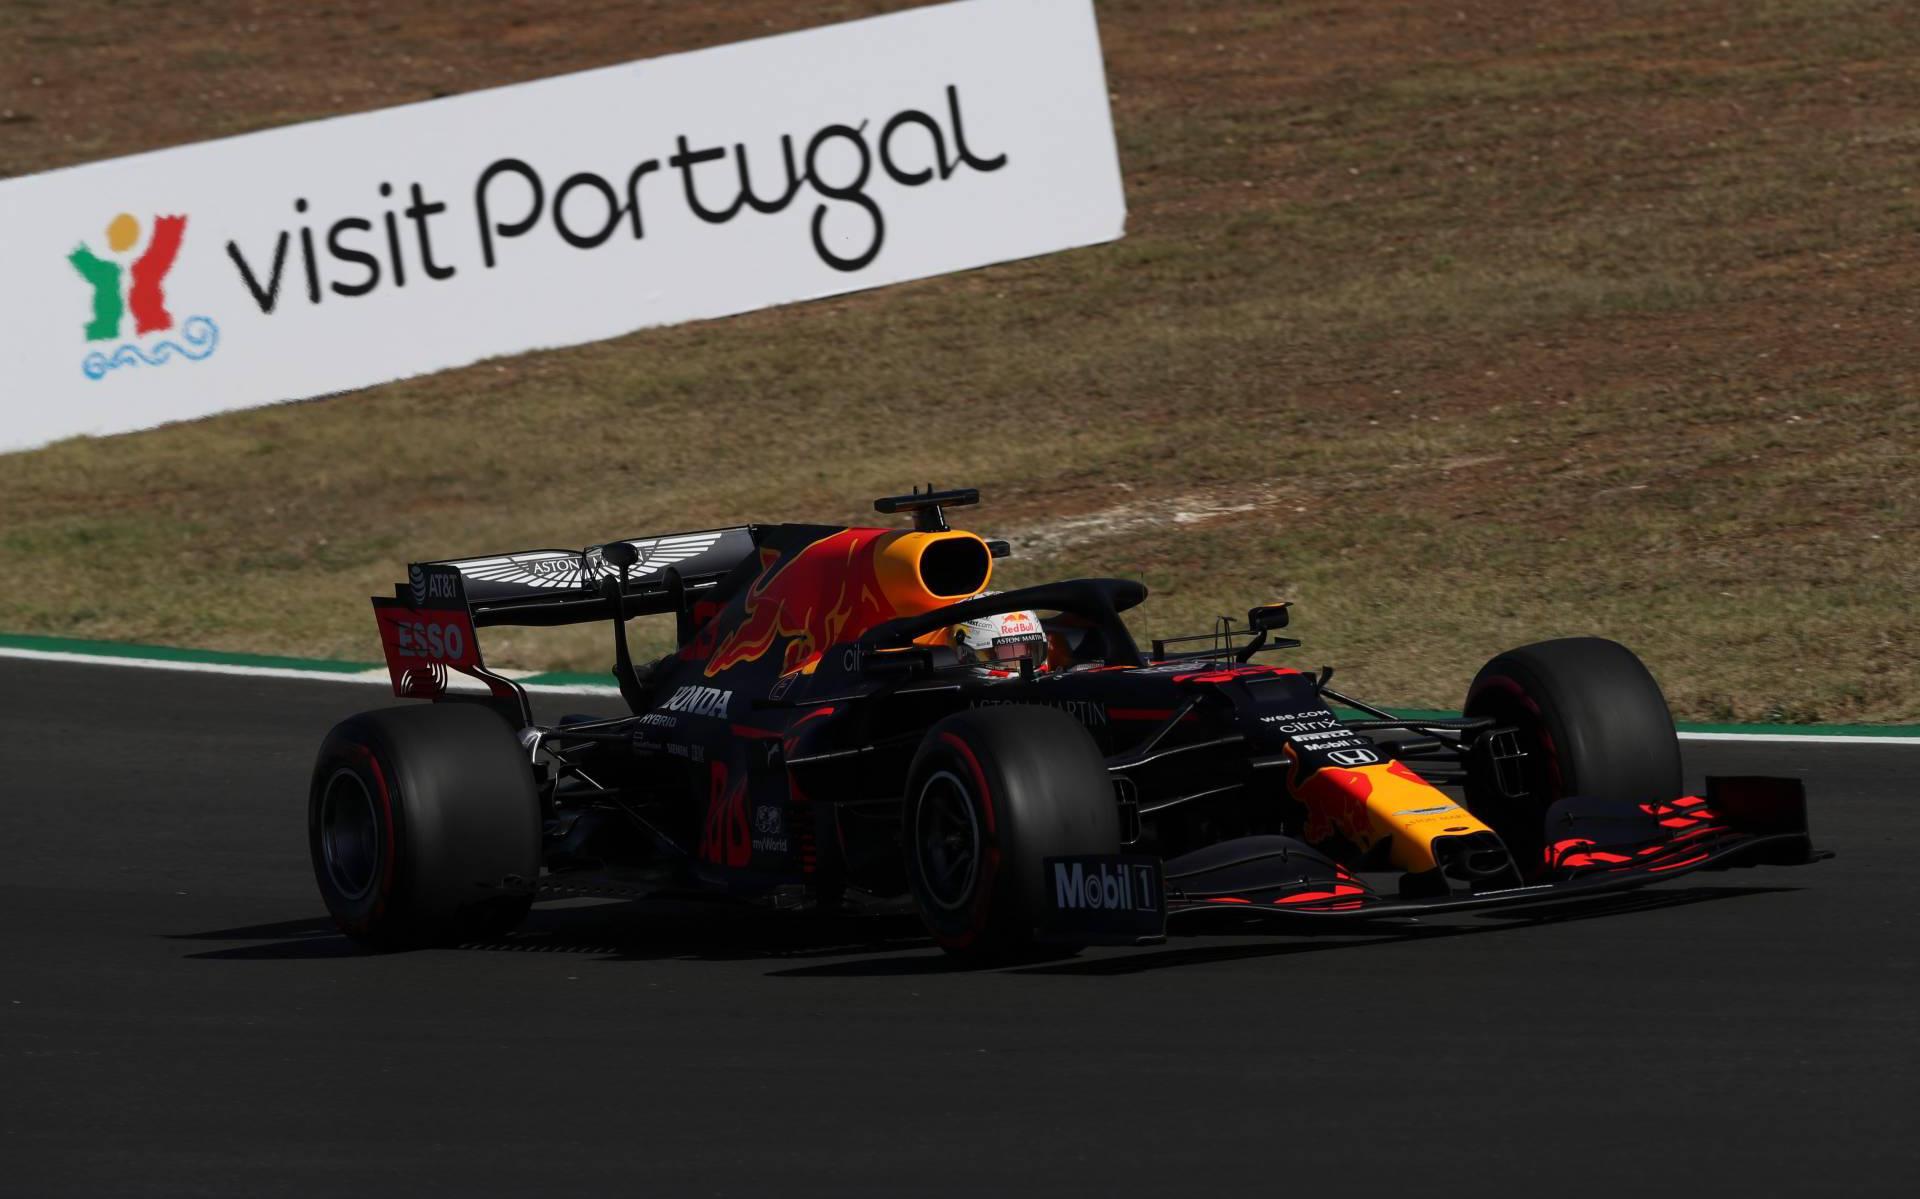 Kwalificatie Formule 1 uitgesteld vanwege afgebroken putdeksel